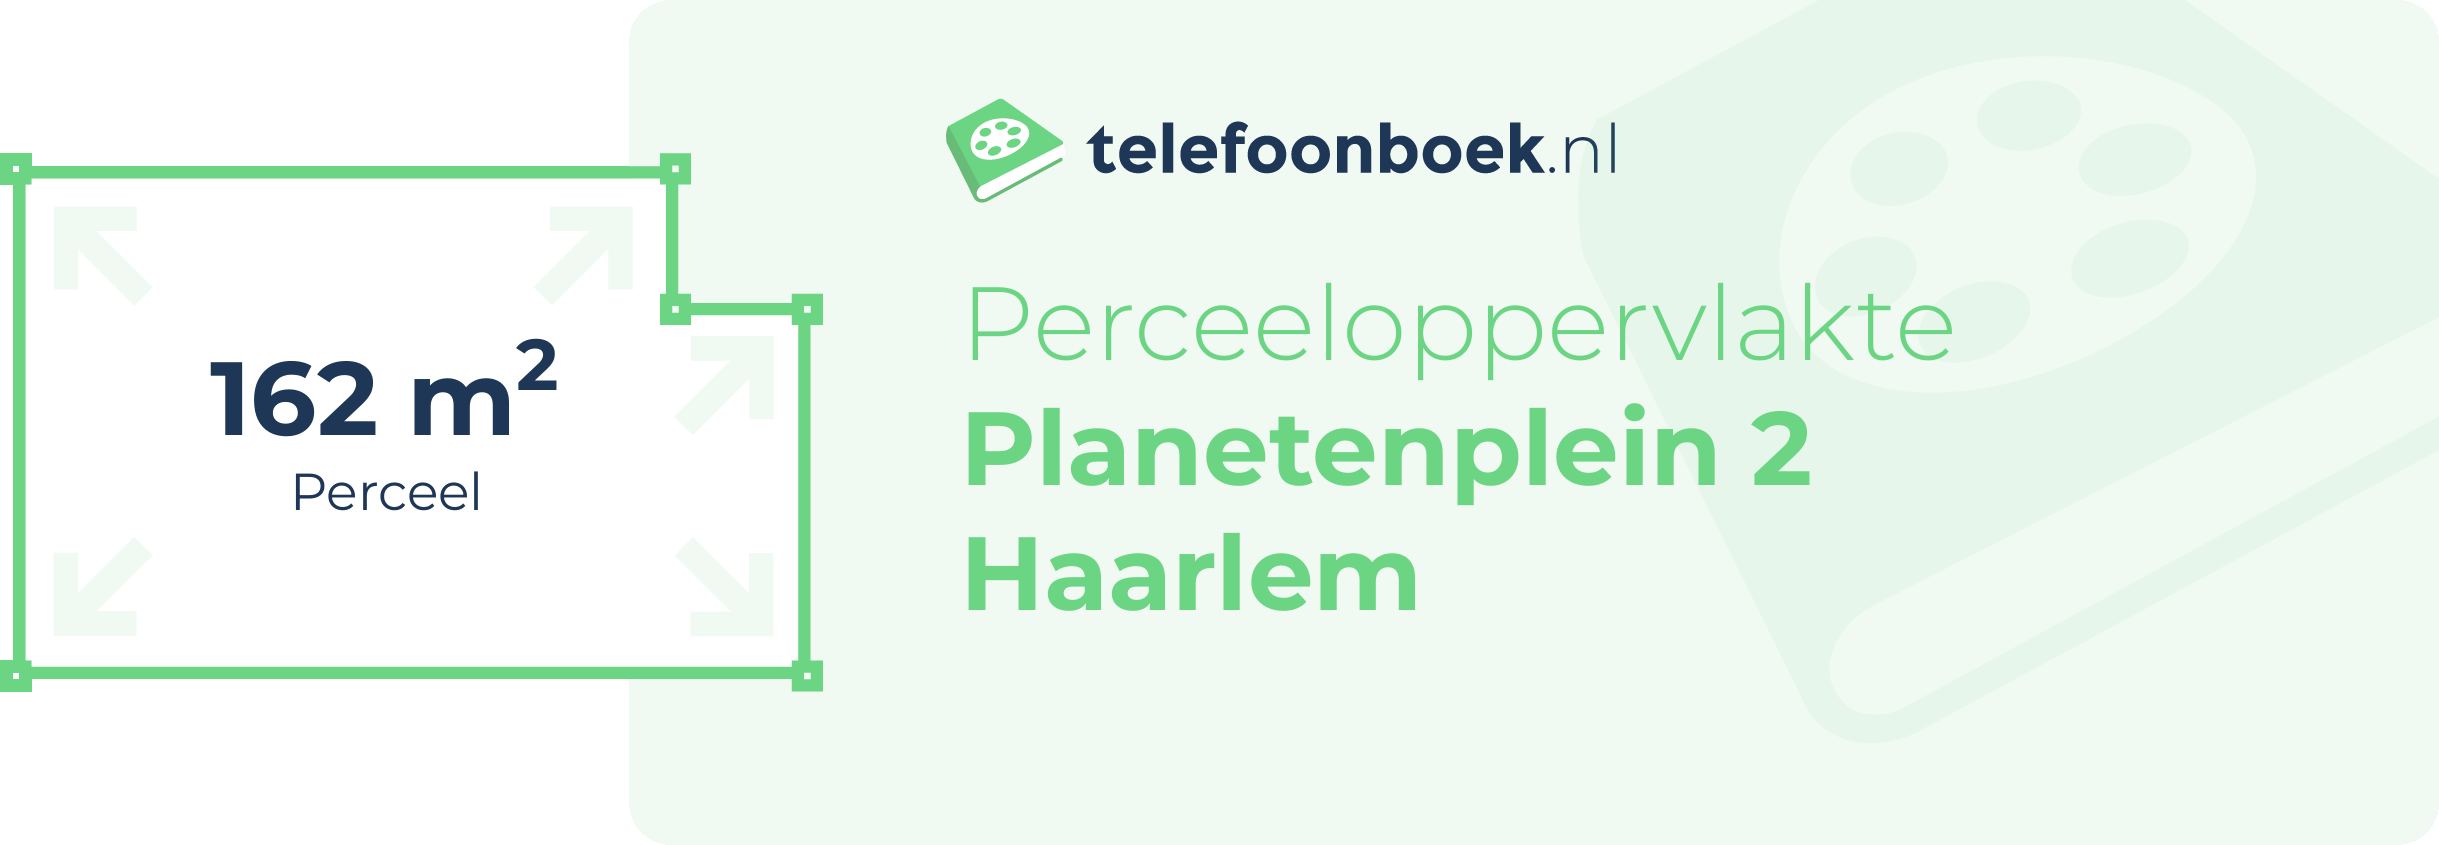 Perceeloppervlakte Planetenplein 2 Haarlem